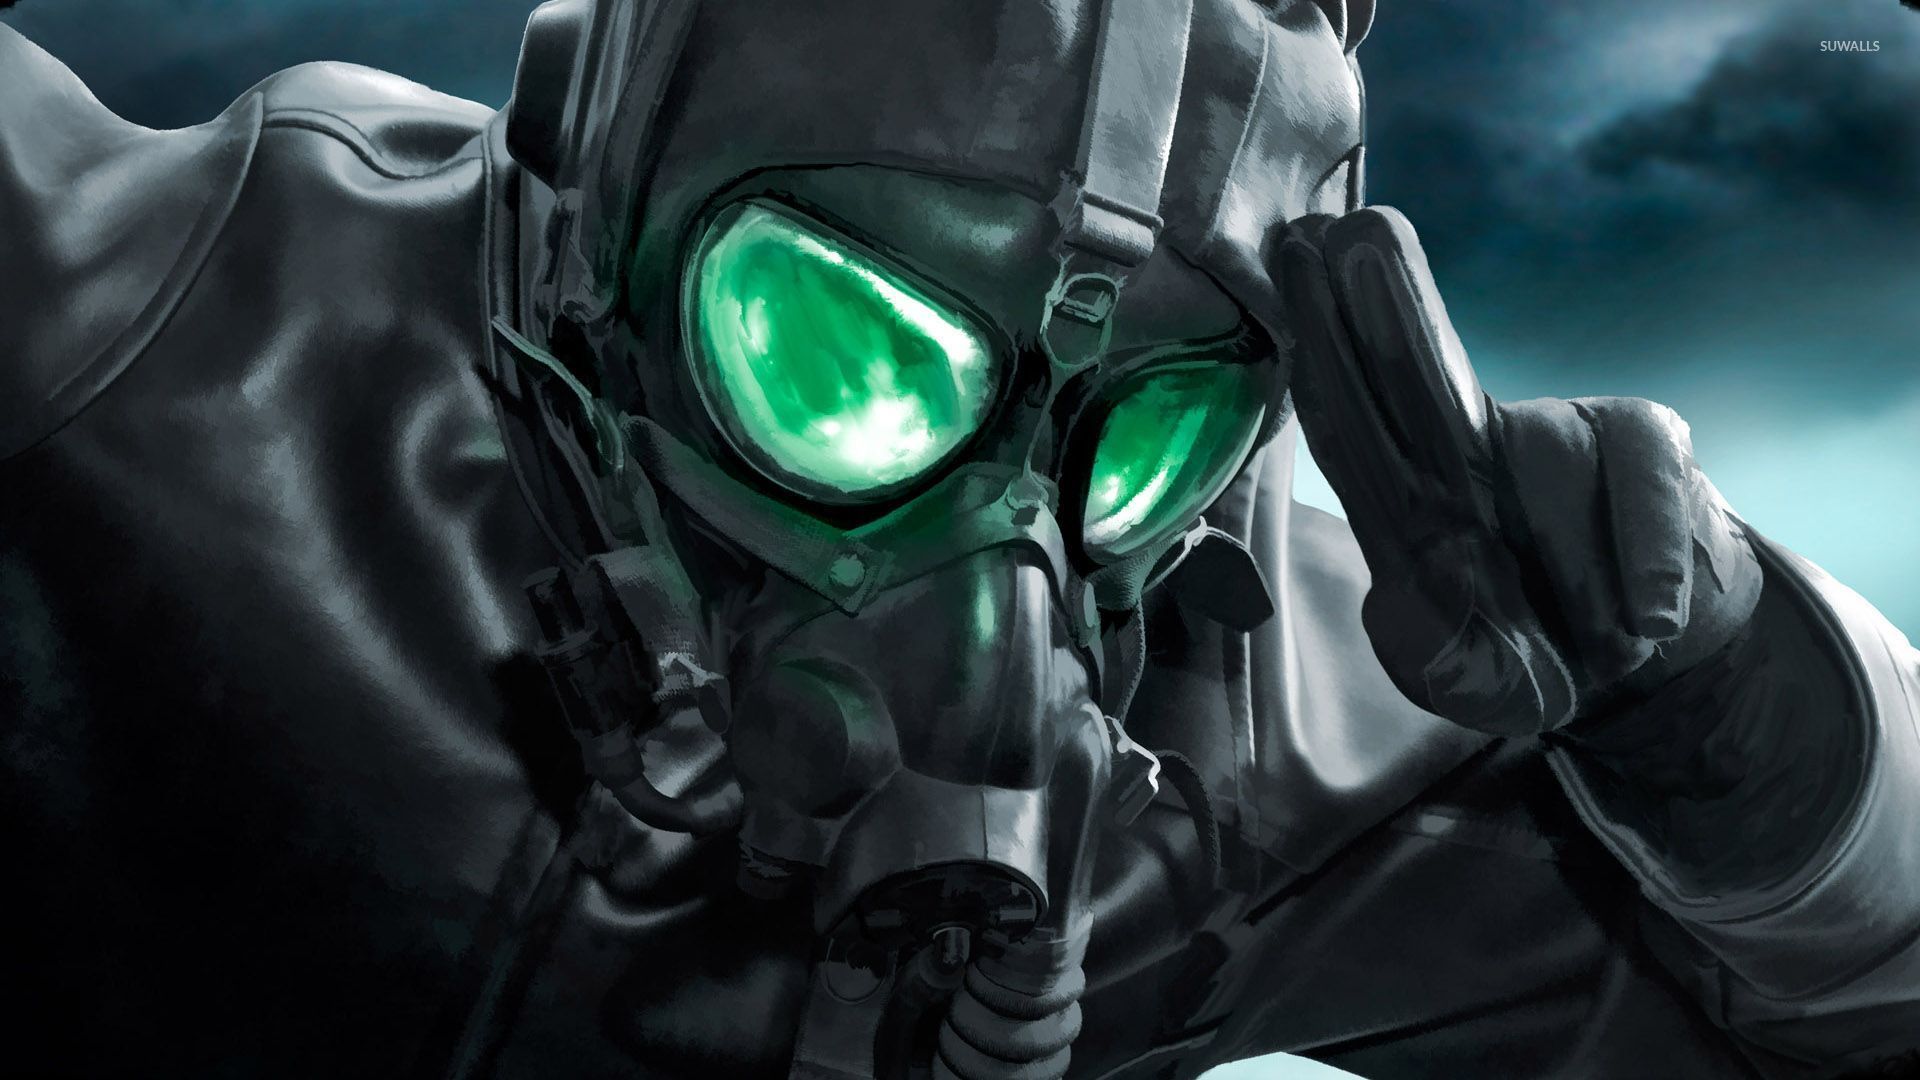 Toxic Mask Wallpaper